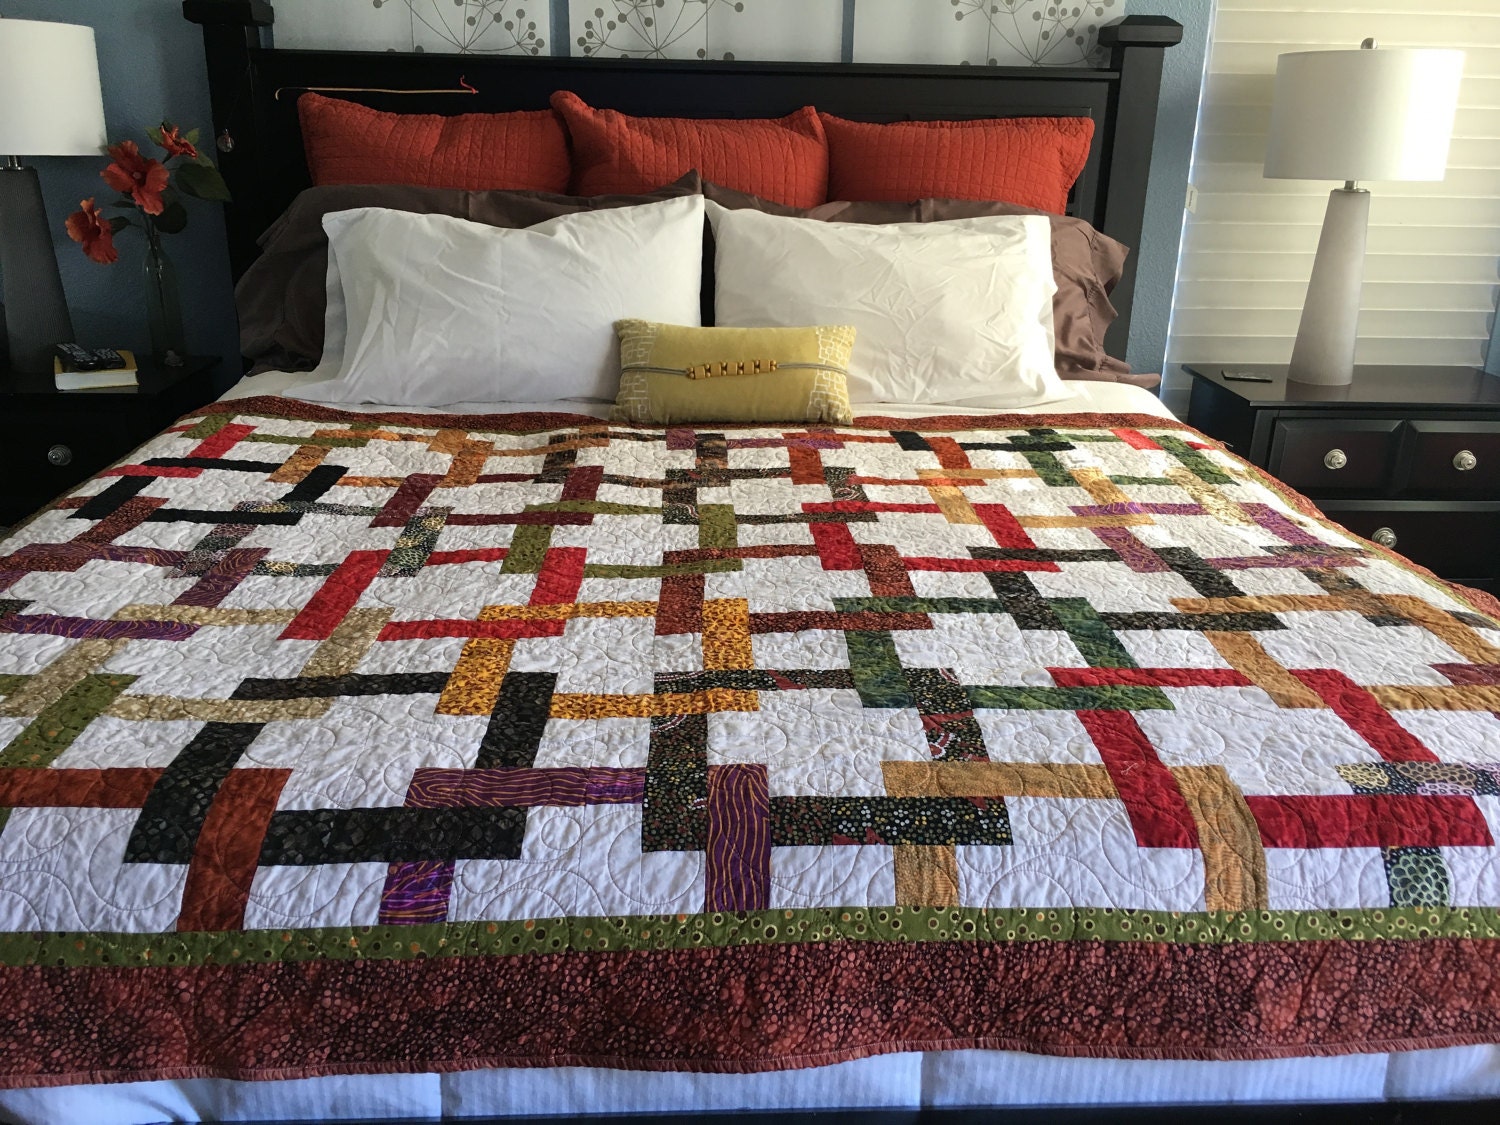 ETHNIC PATH - Handmade Quilt